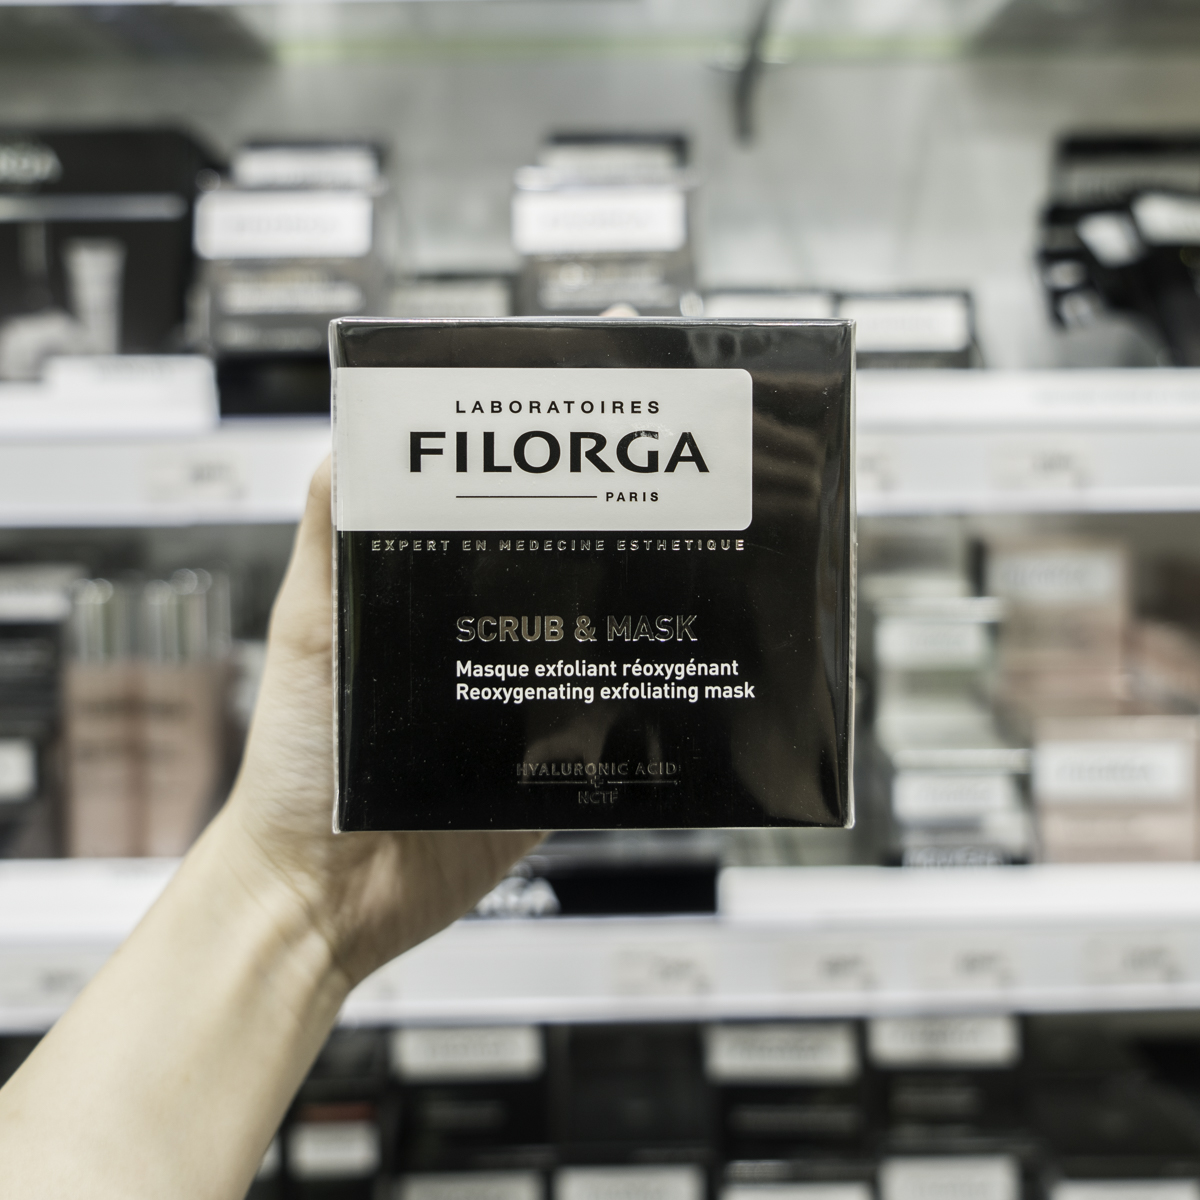 where to buy Filorga in Paris